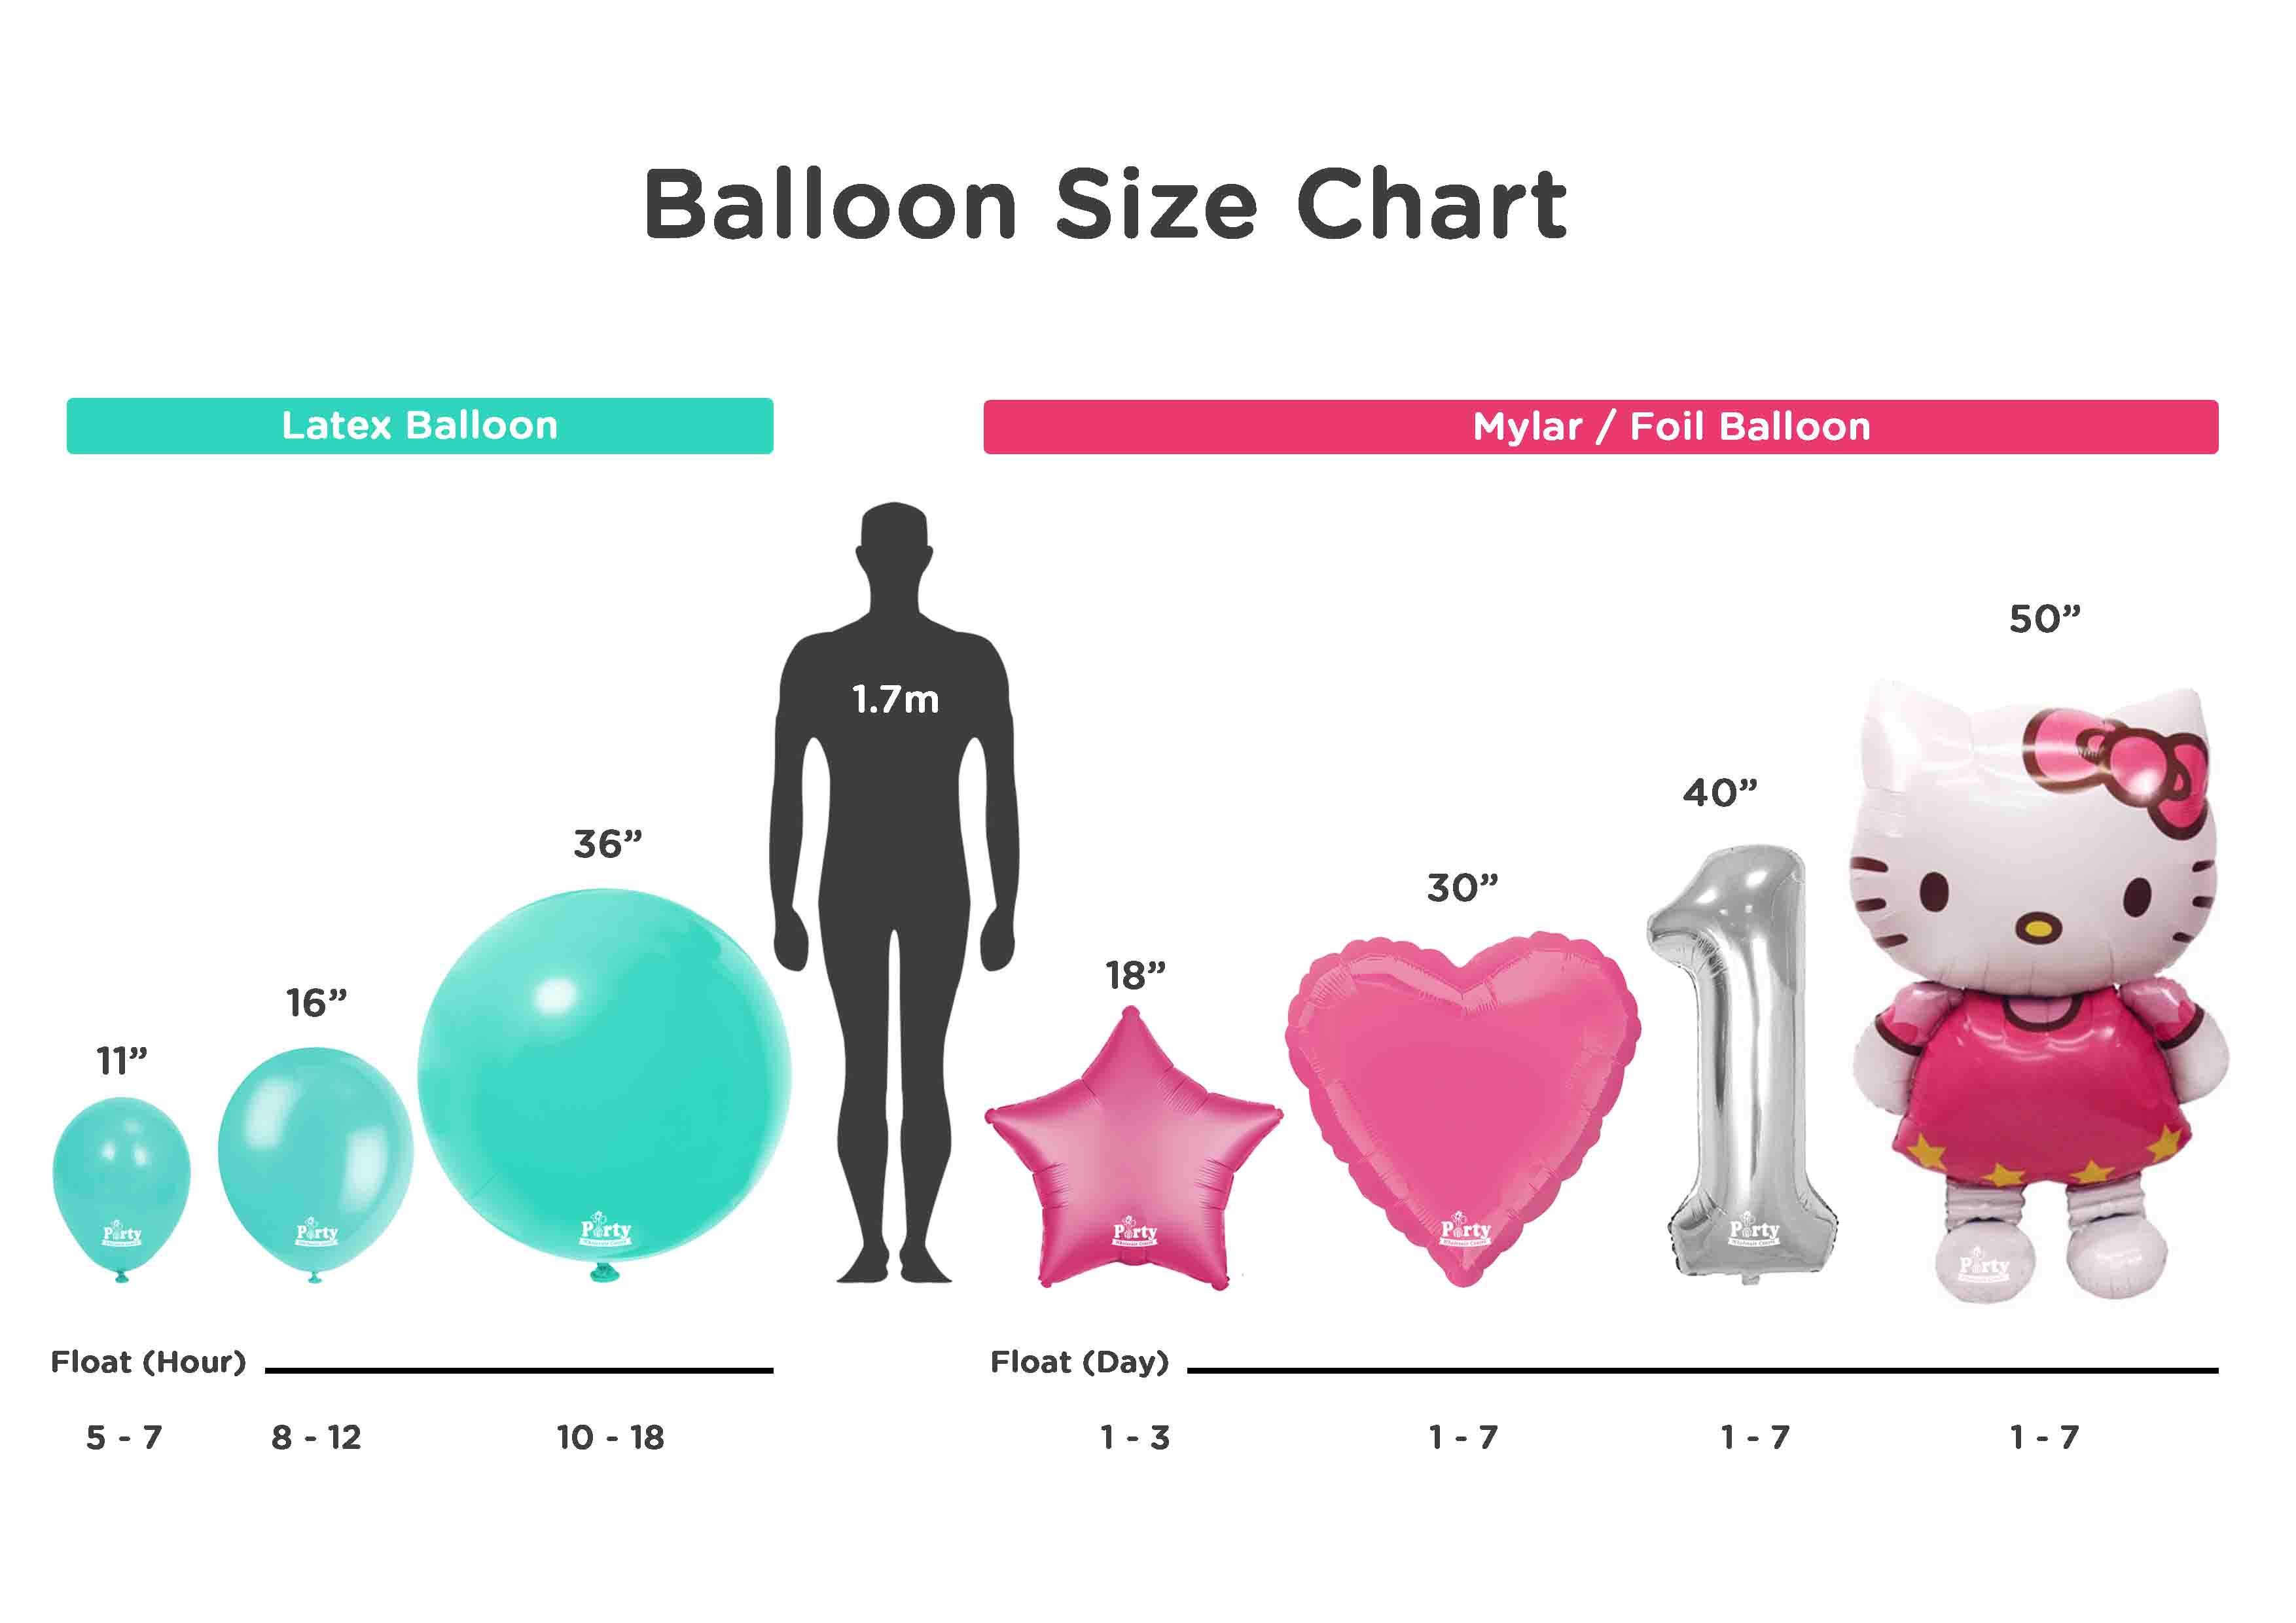 Love Label Size Chart